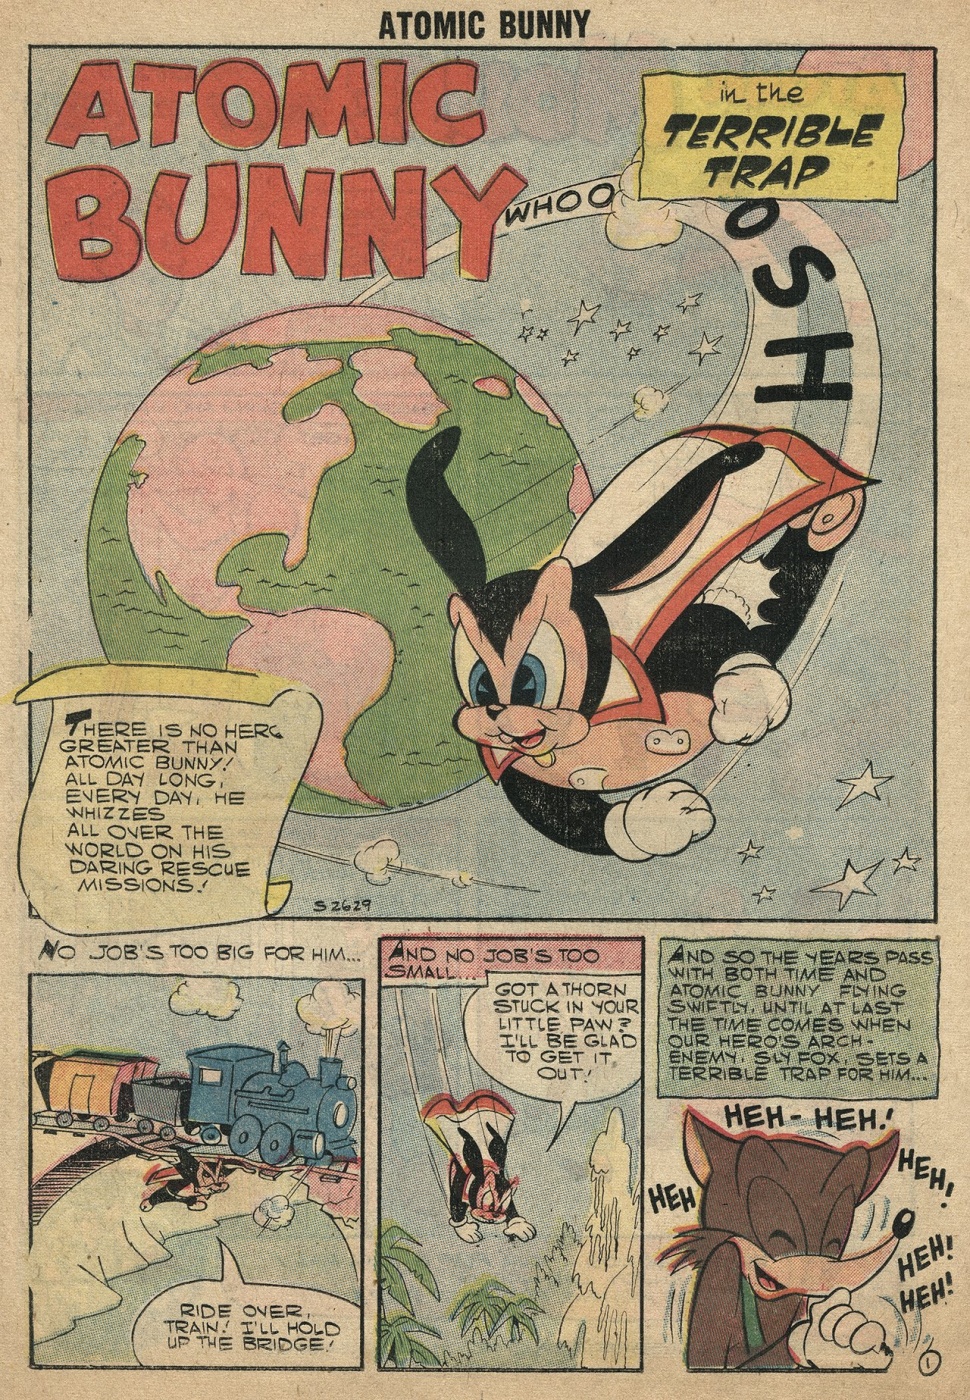 Atomic-Bunny-Comic-Strips (26)